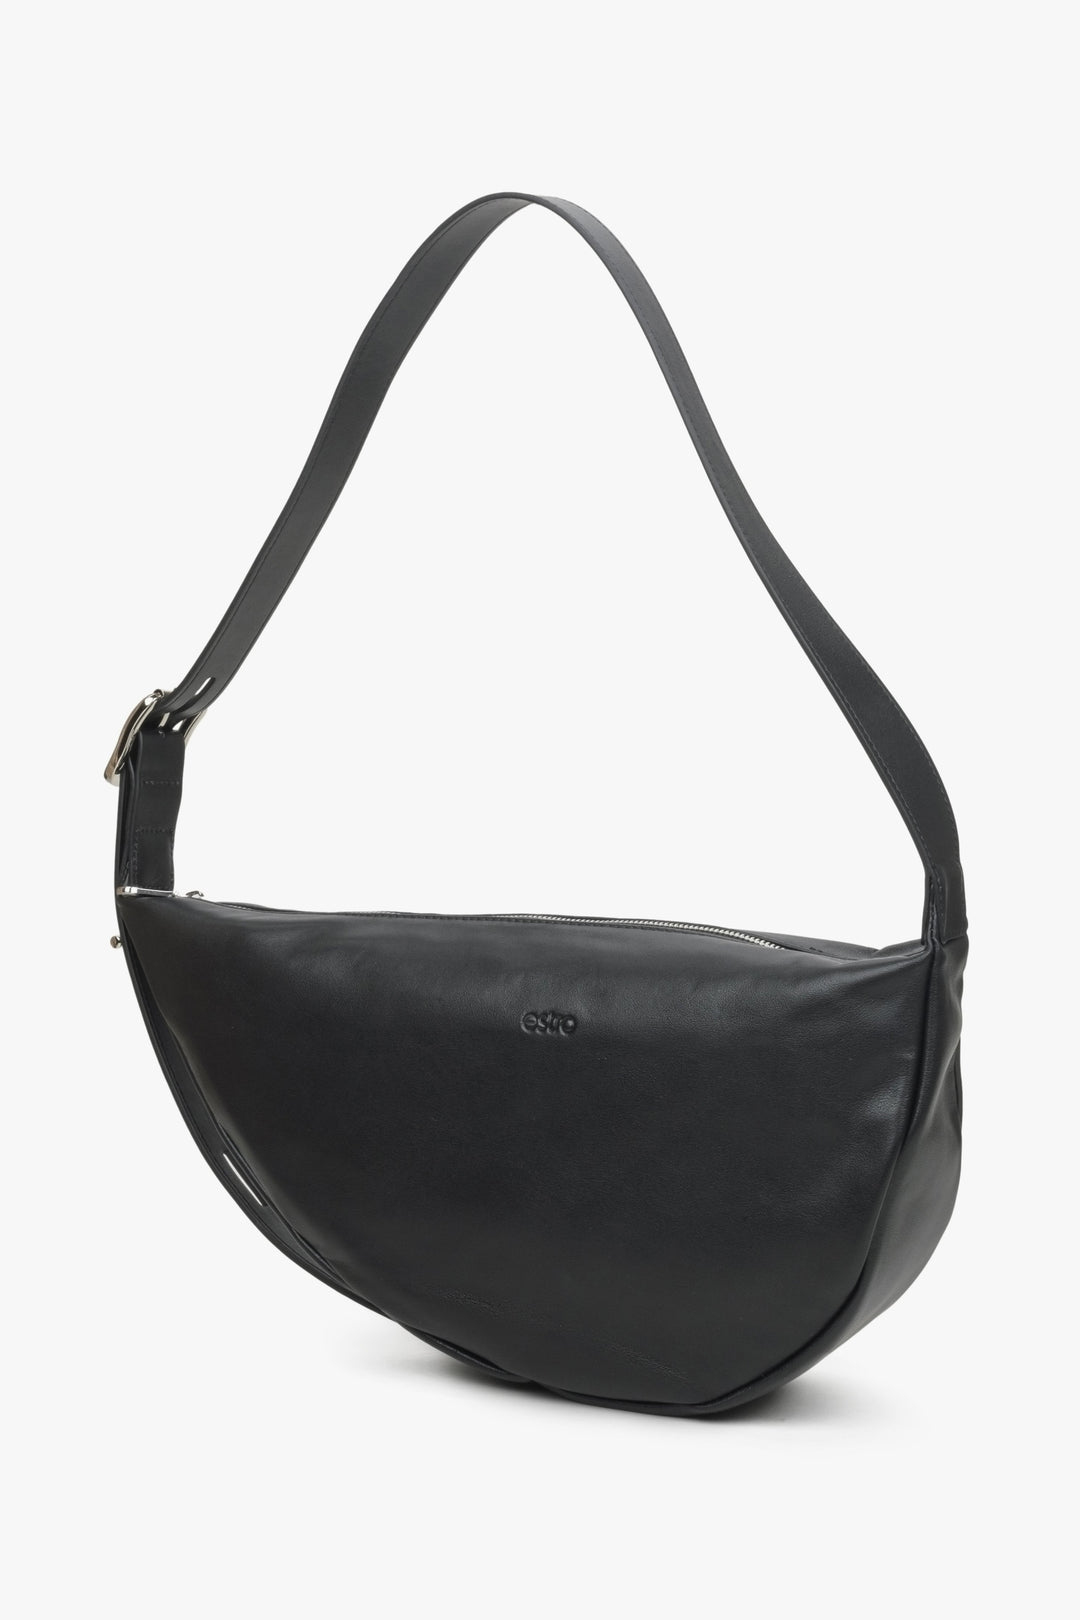 Women's black leather Estro handbag - front view of the model.